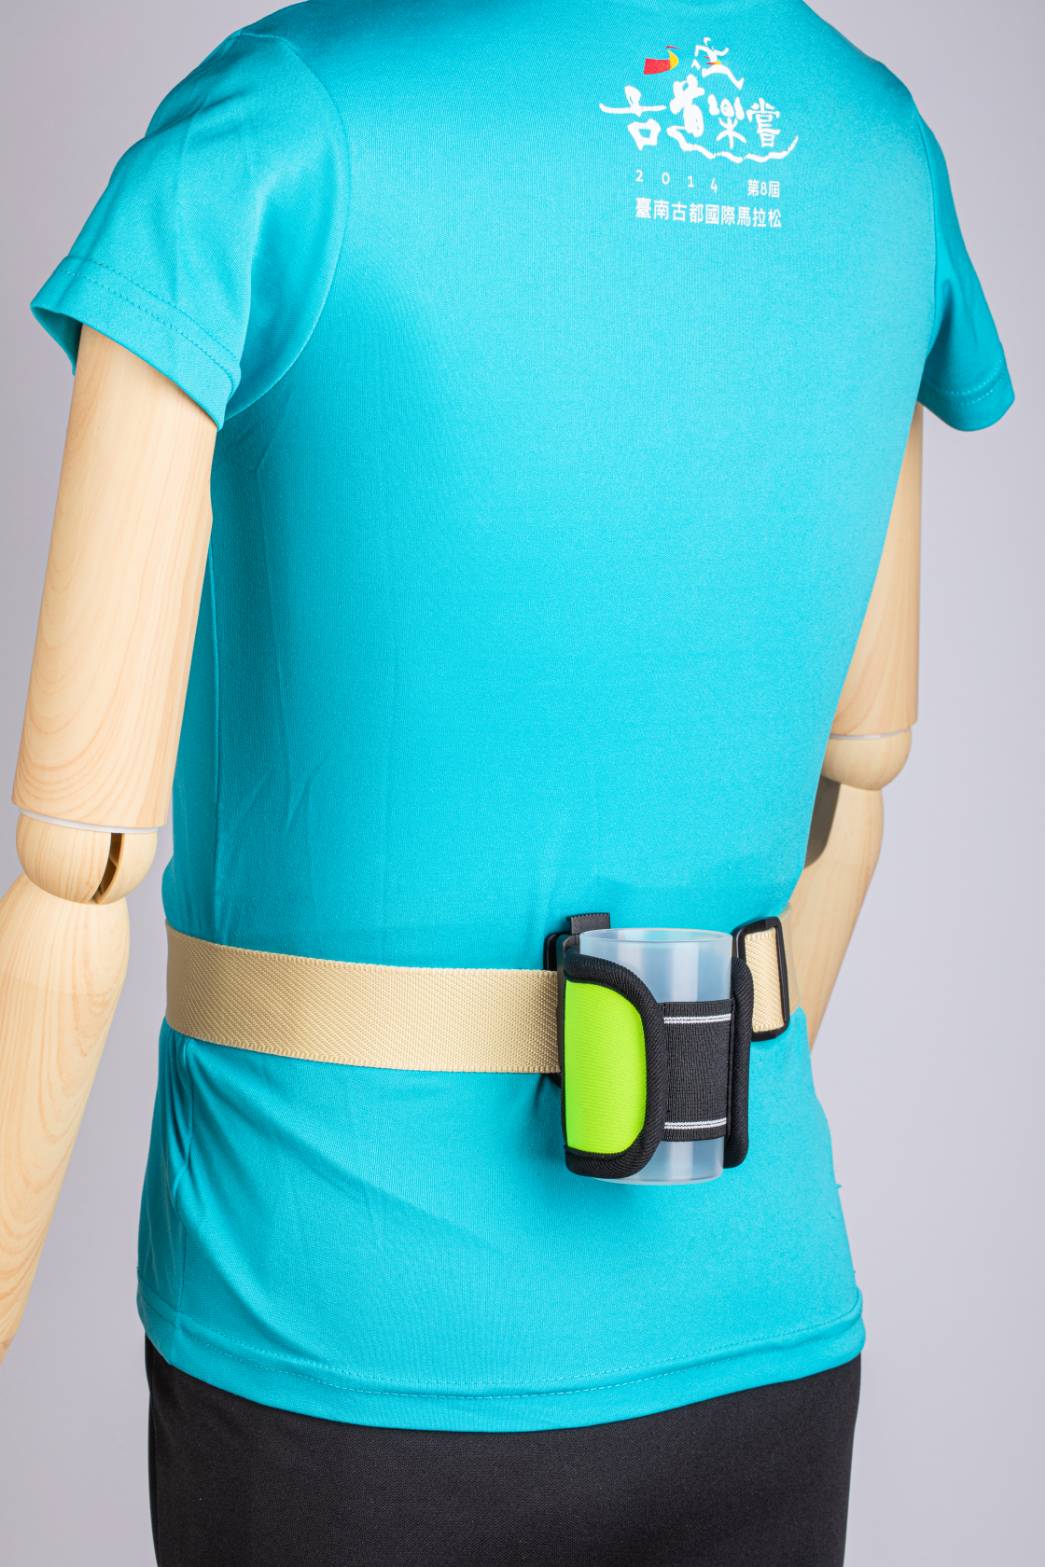 Belt w clip, elastic anti slip  sleeve ,cup